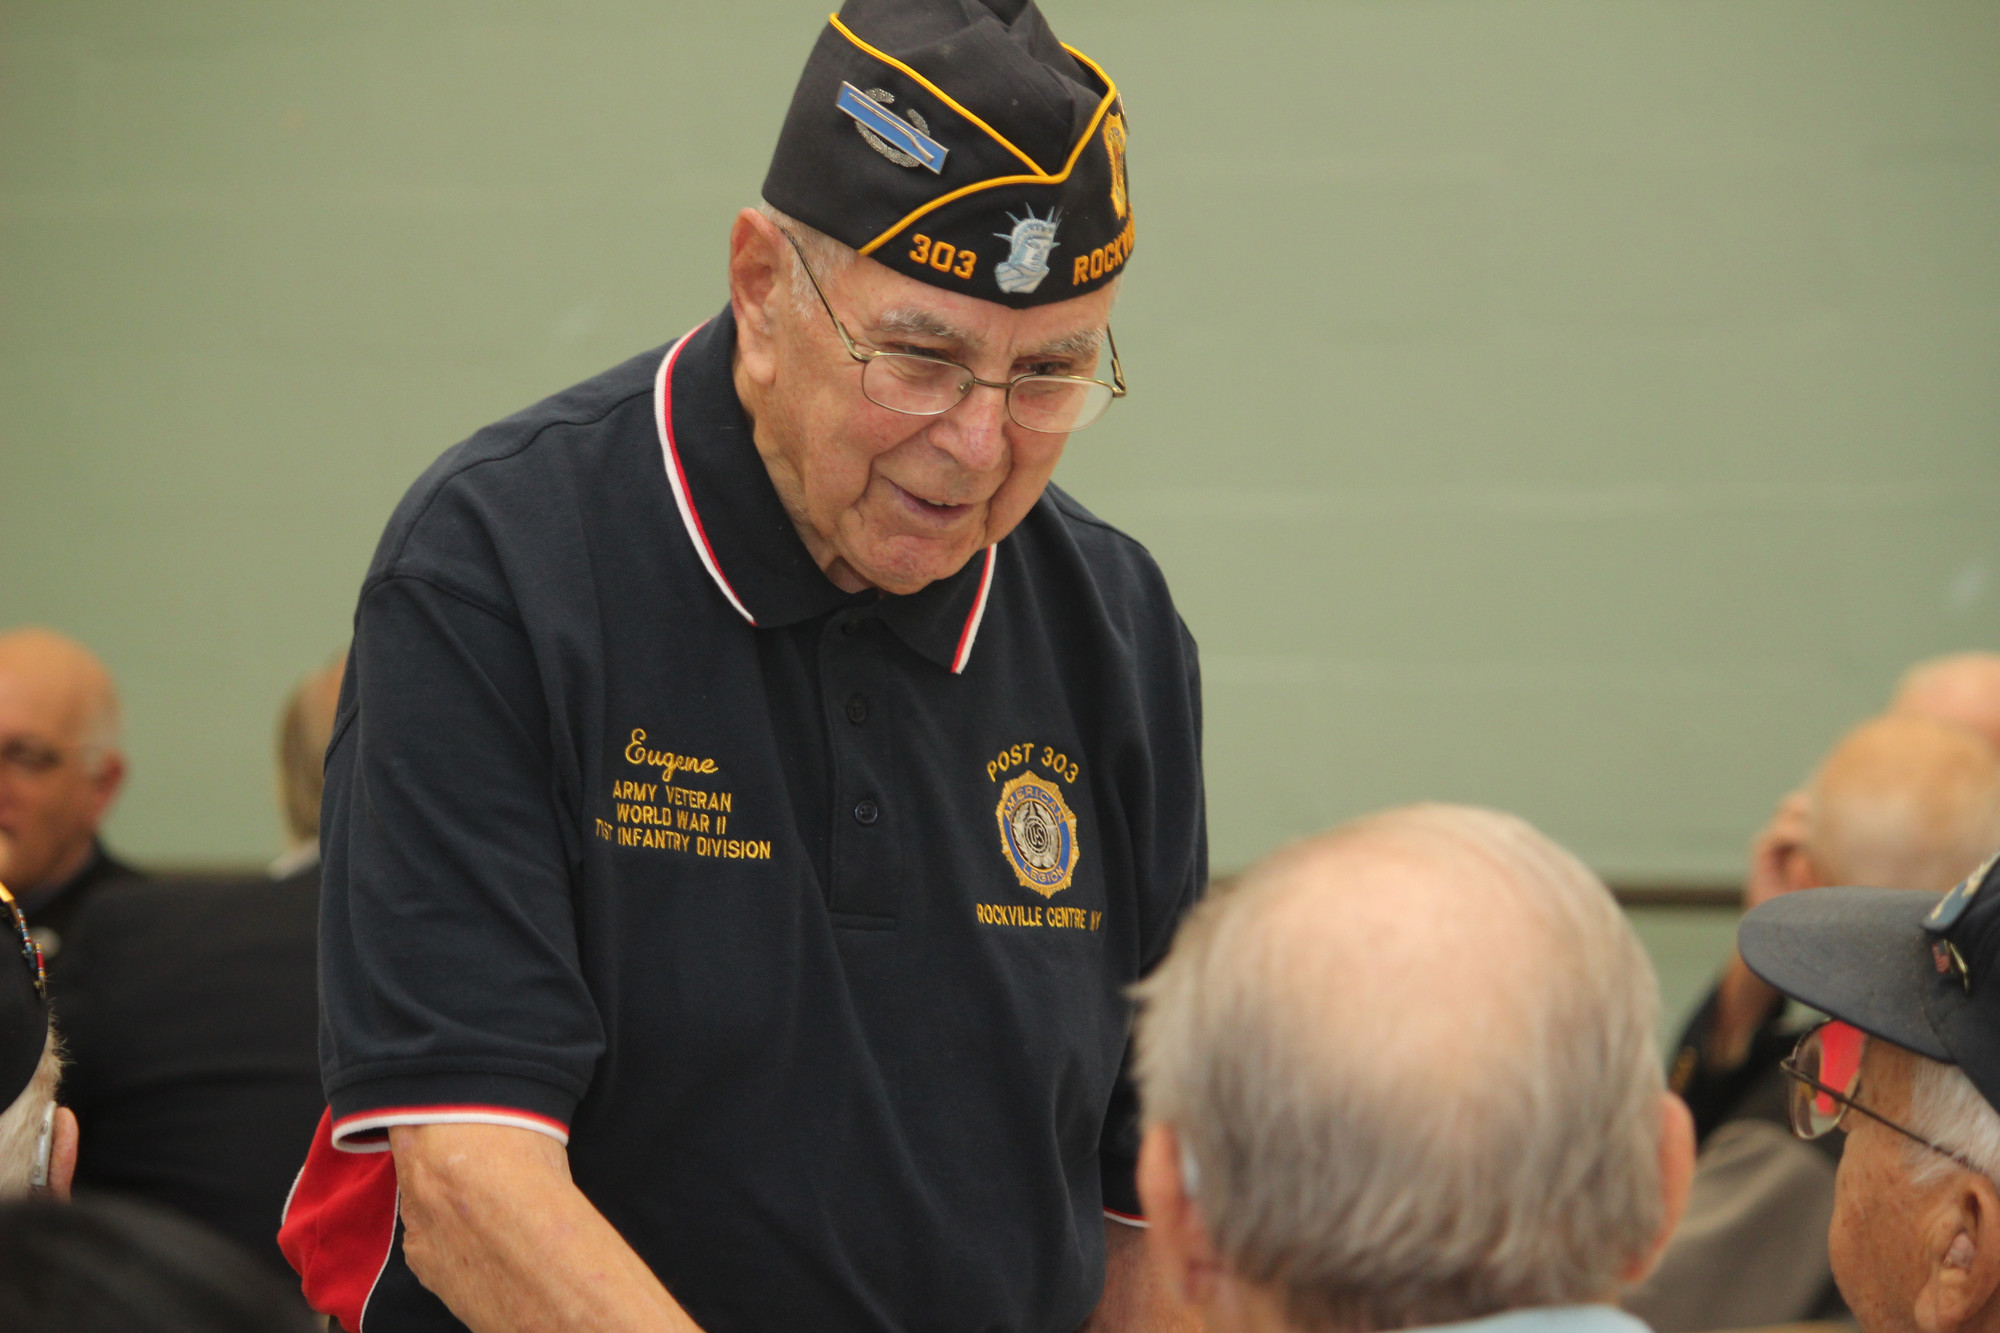 World War II veteran and former mayor Gene Murray greeted some of his fellow veterans.